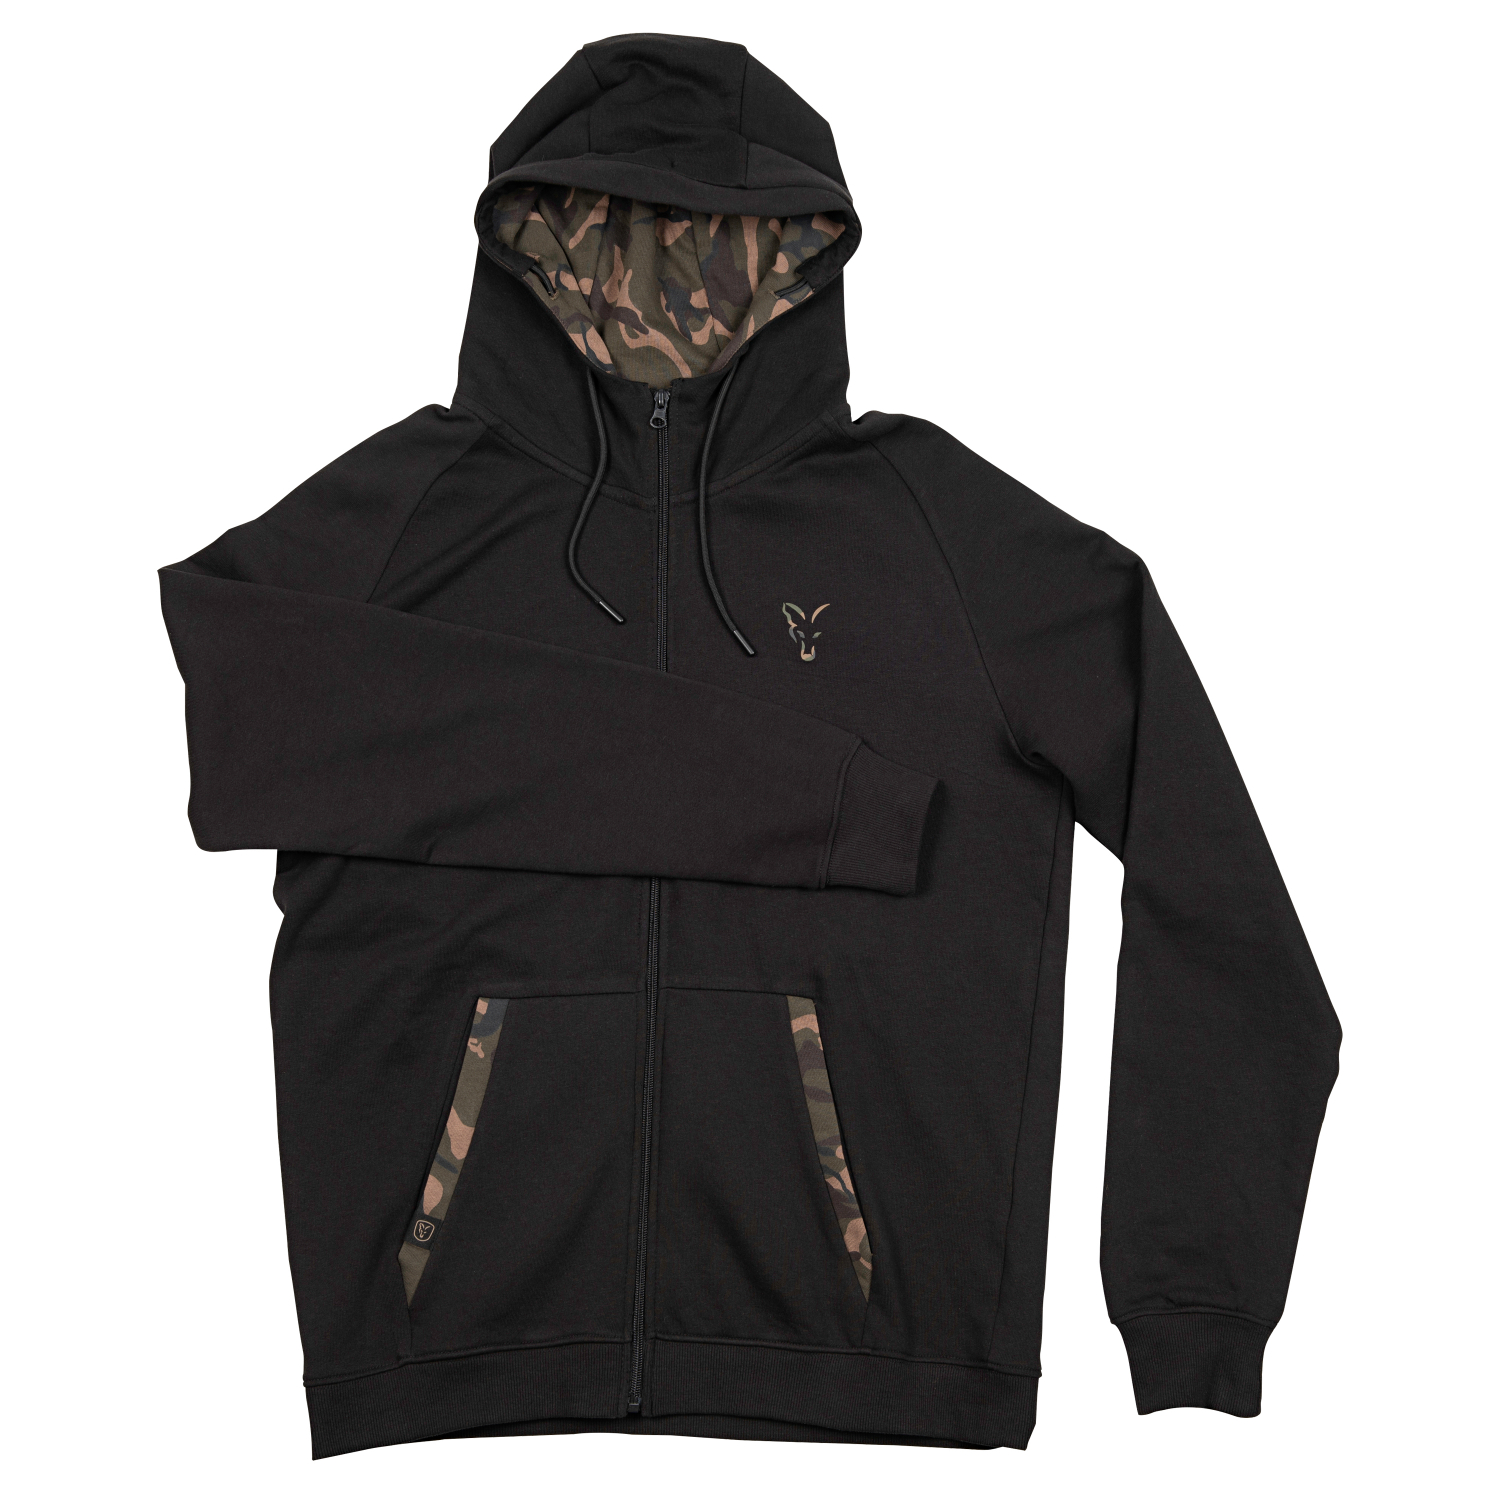 https://images.askari-sport.com/en/product/1/large/fox-carp-mens-lw-zip-hoodie-blackcamo.jpg